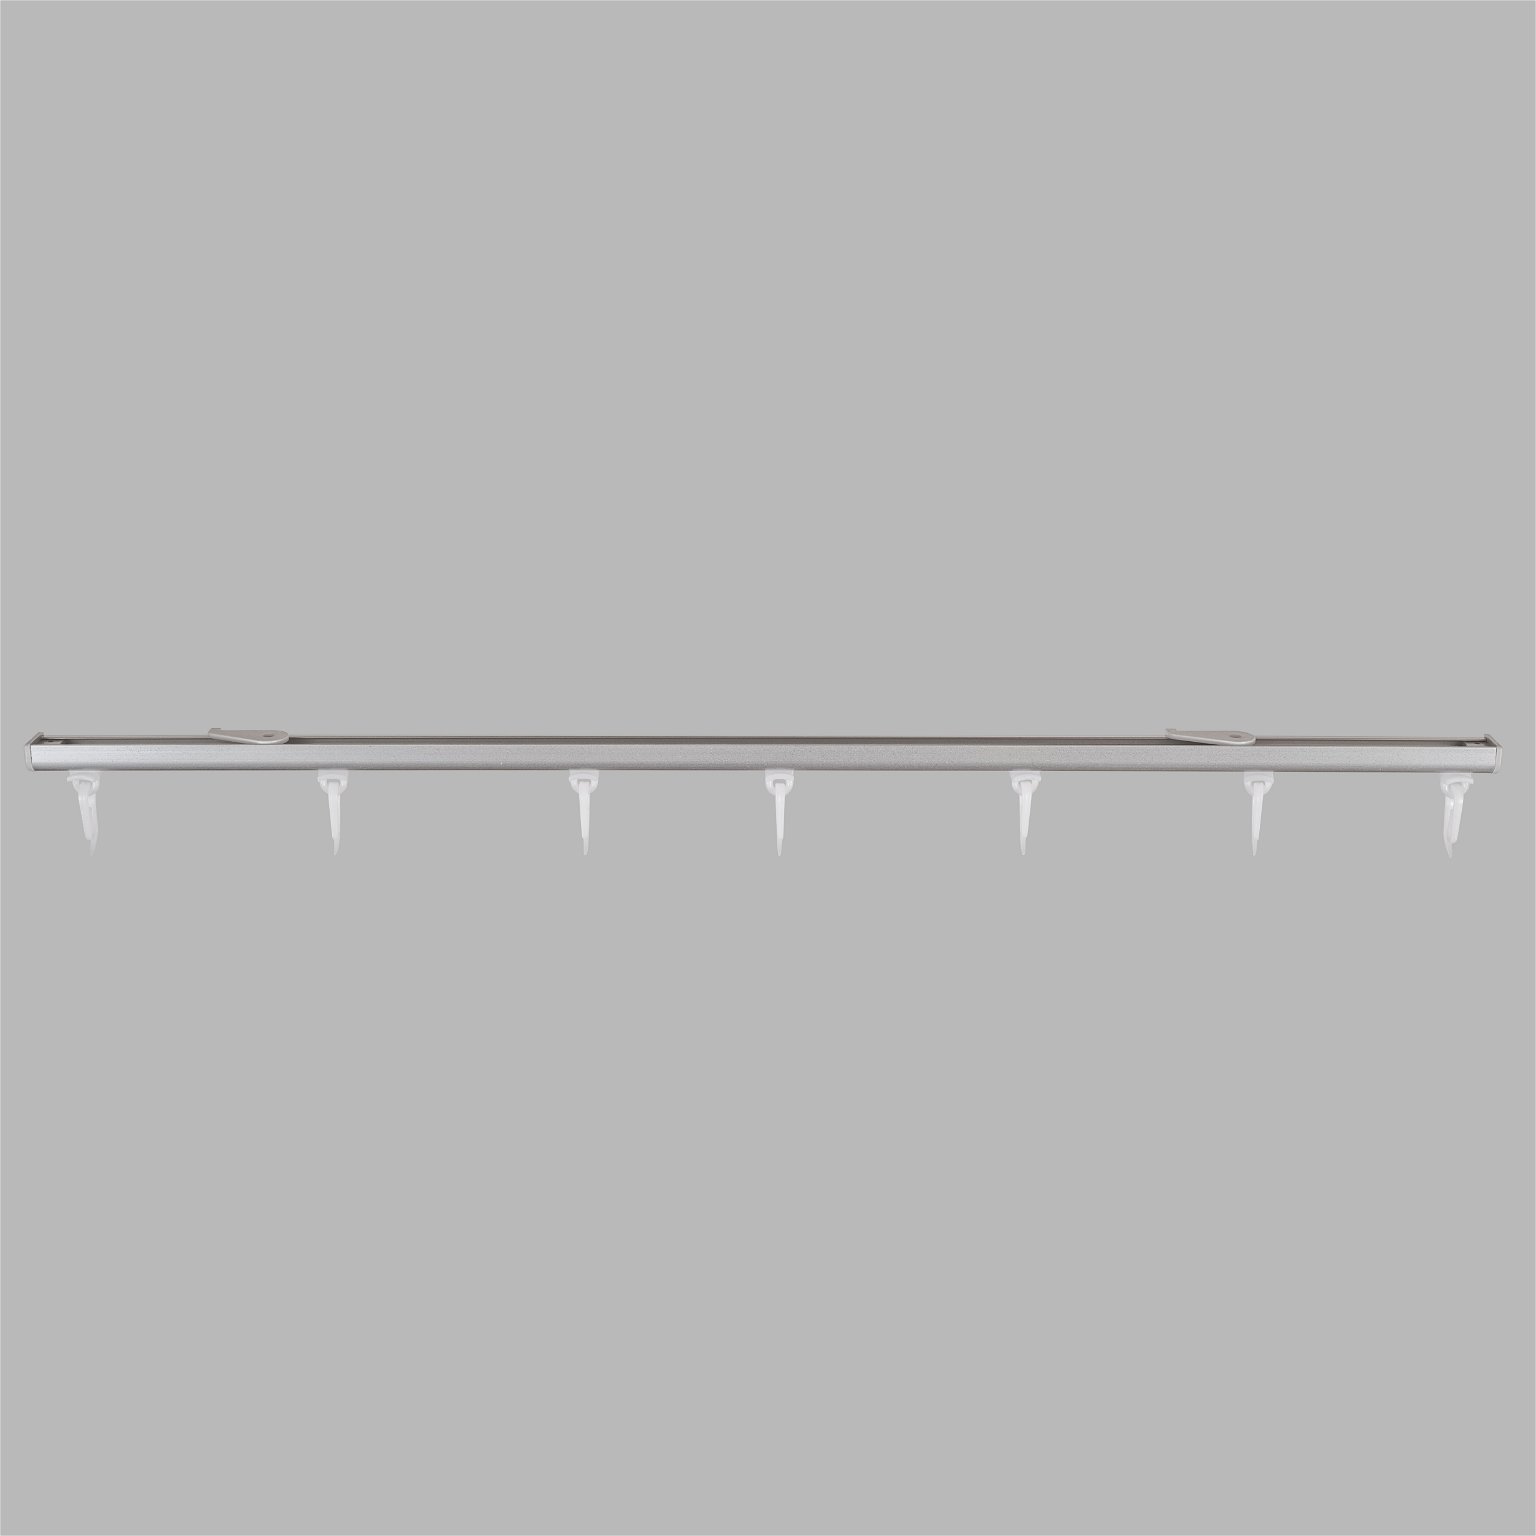 Aliuminio profilis D, matinio chromo sp., 300 cm, sukomplektuotas - 1